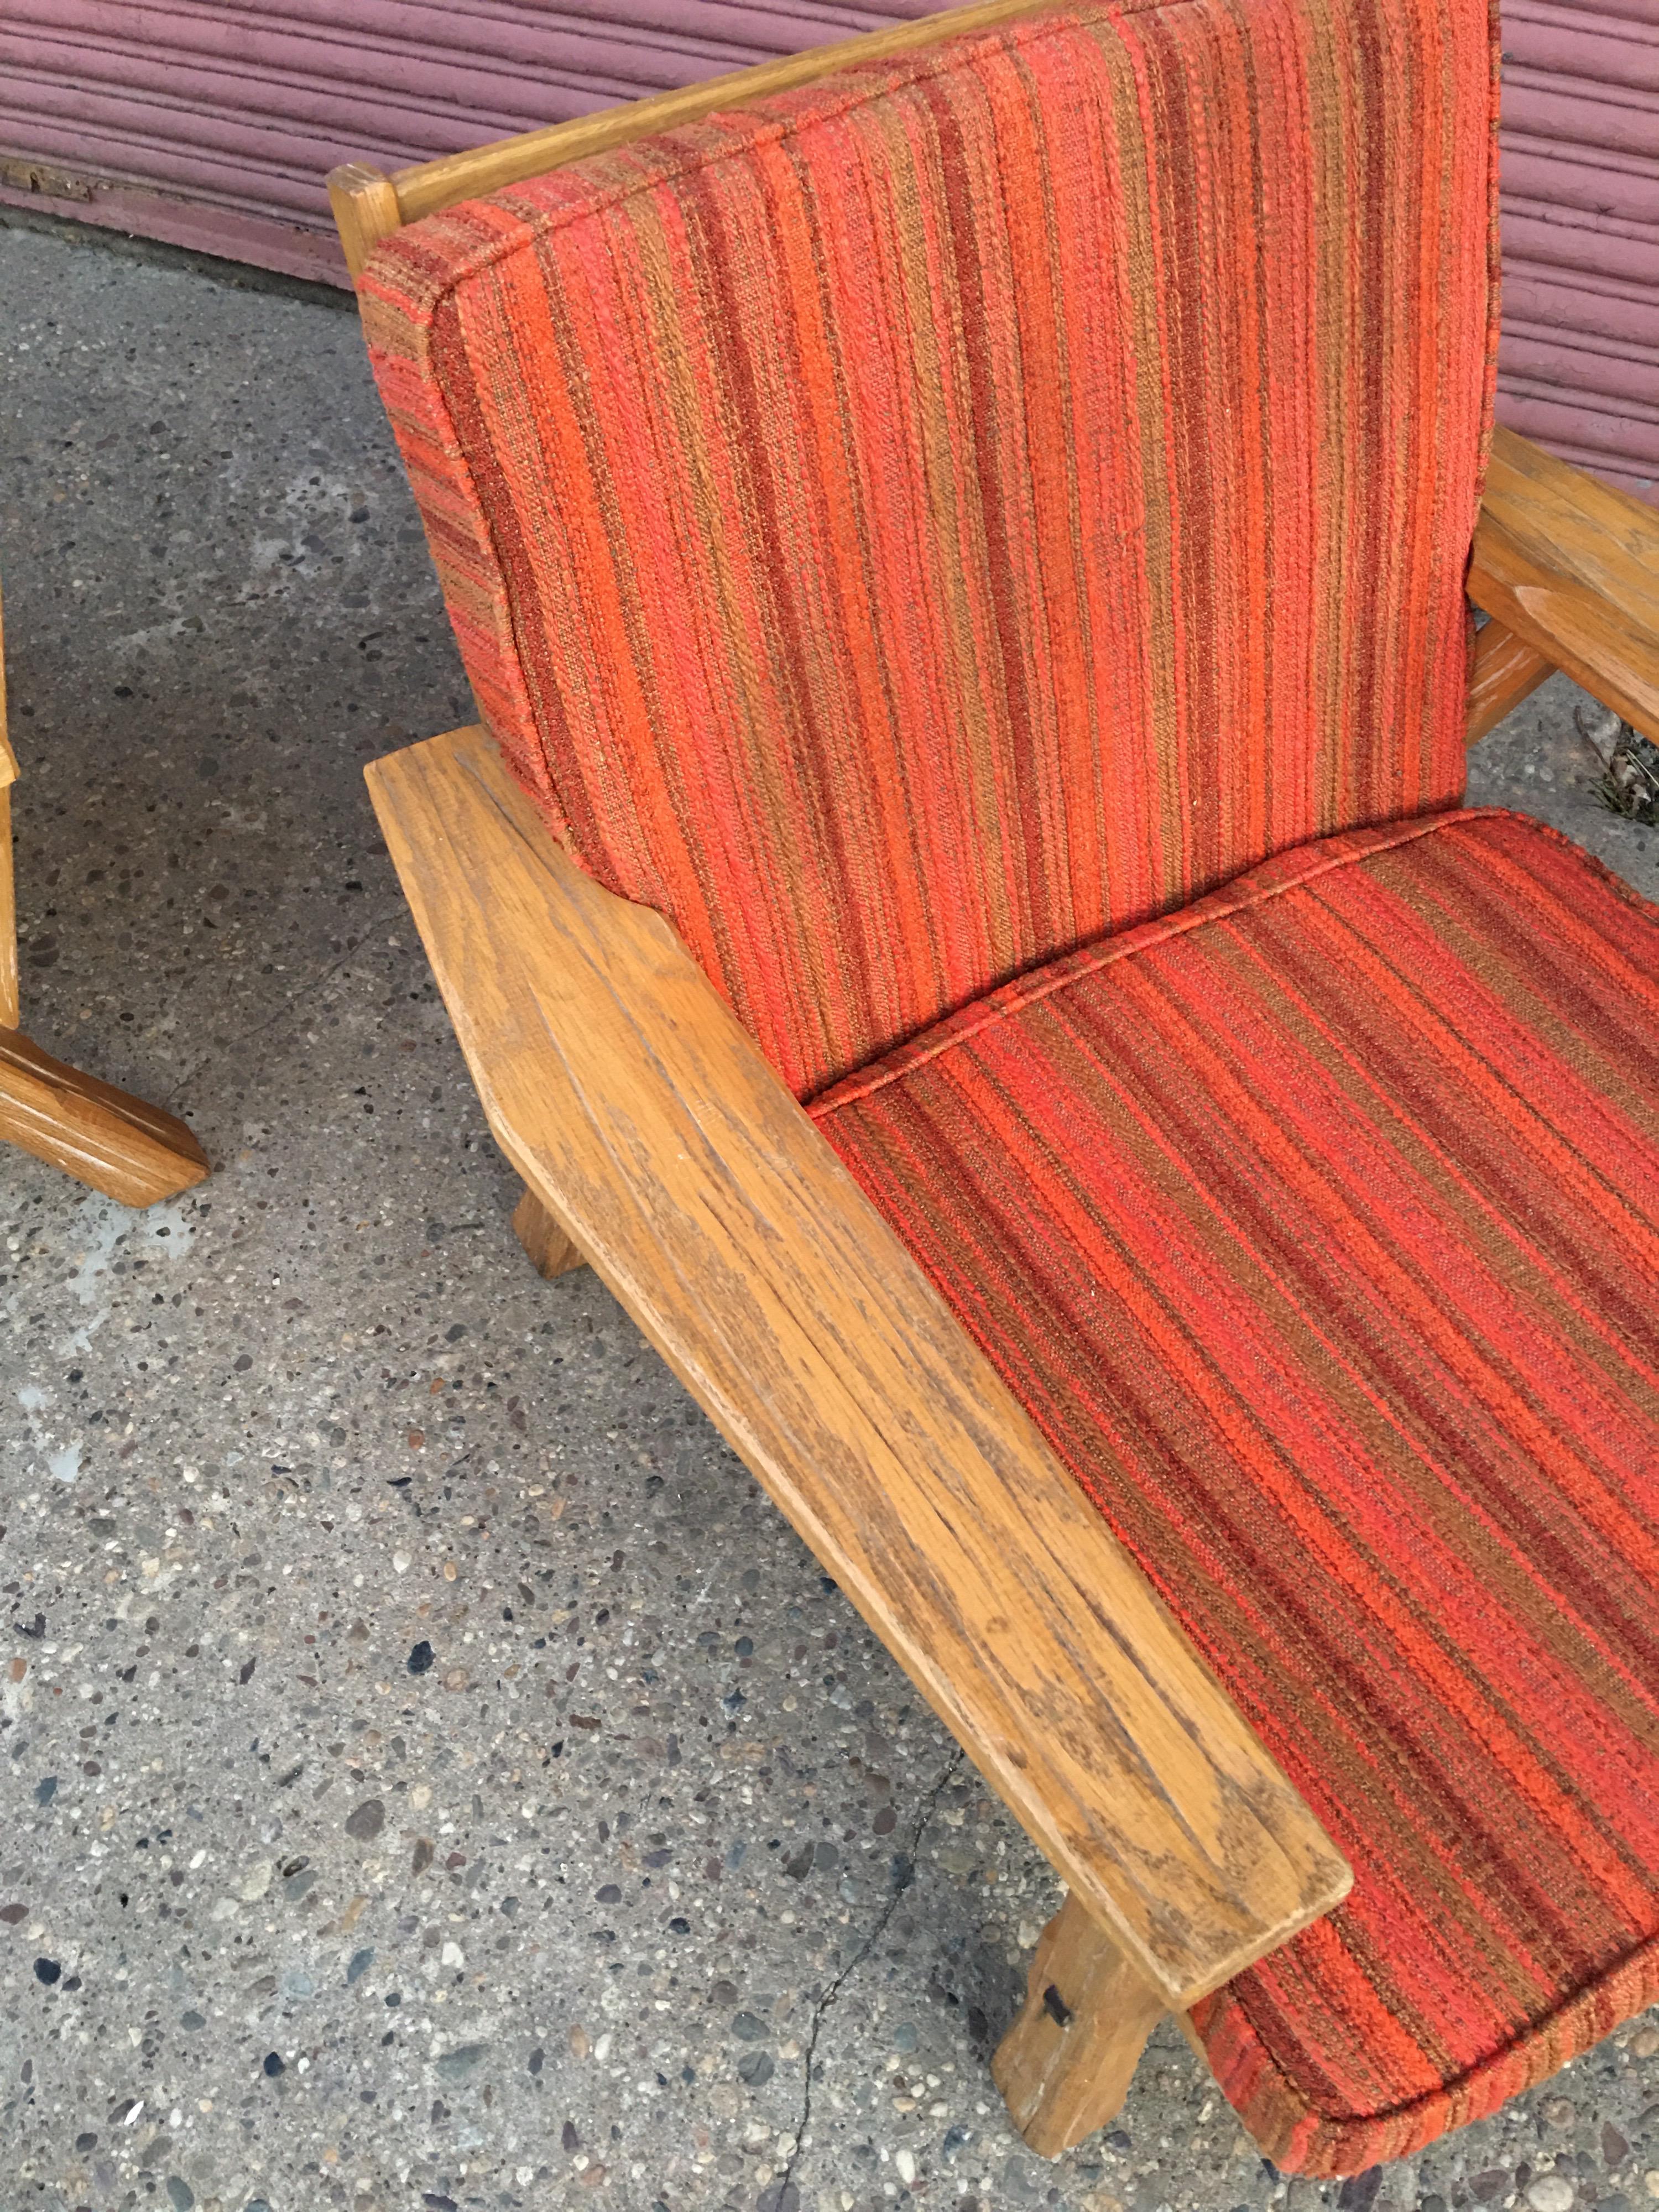 ranch oak chairs